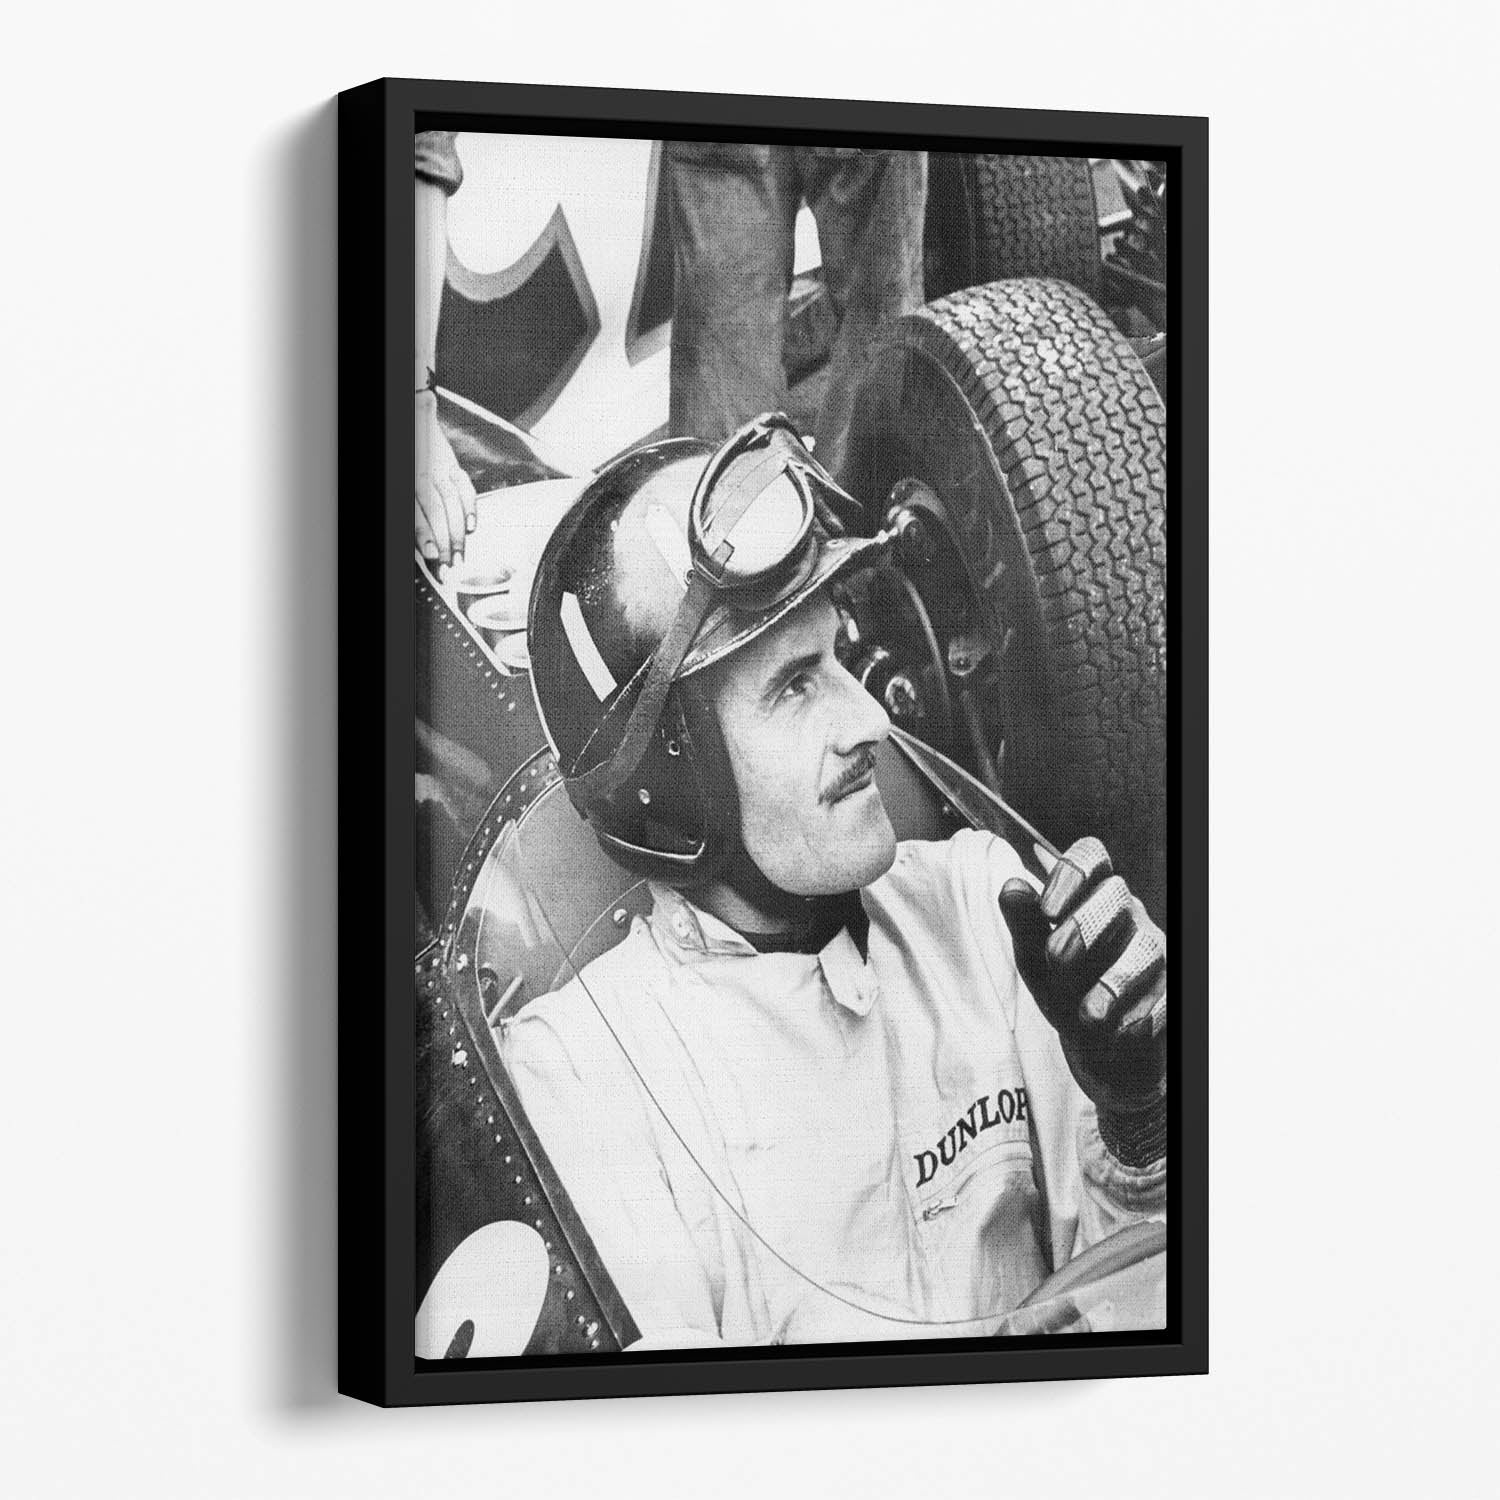 Racing driver Graham Hill Floating Framed Canvas